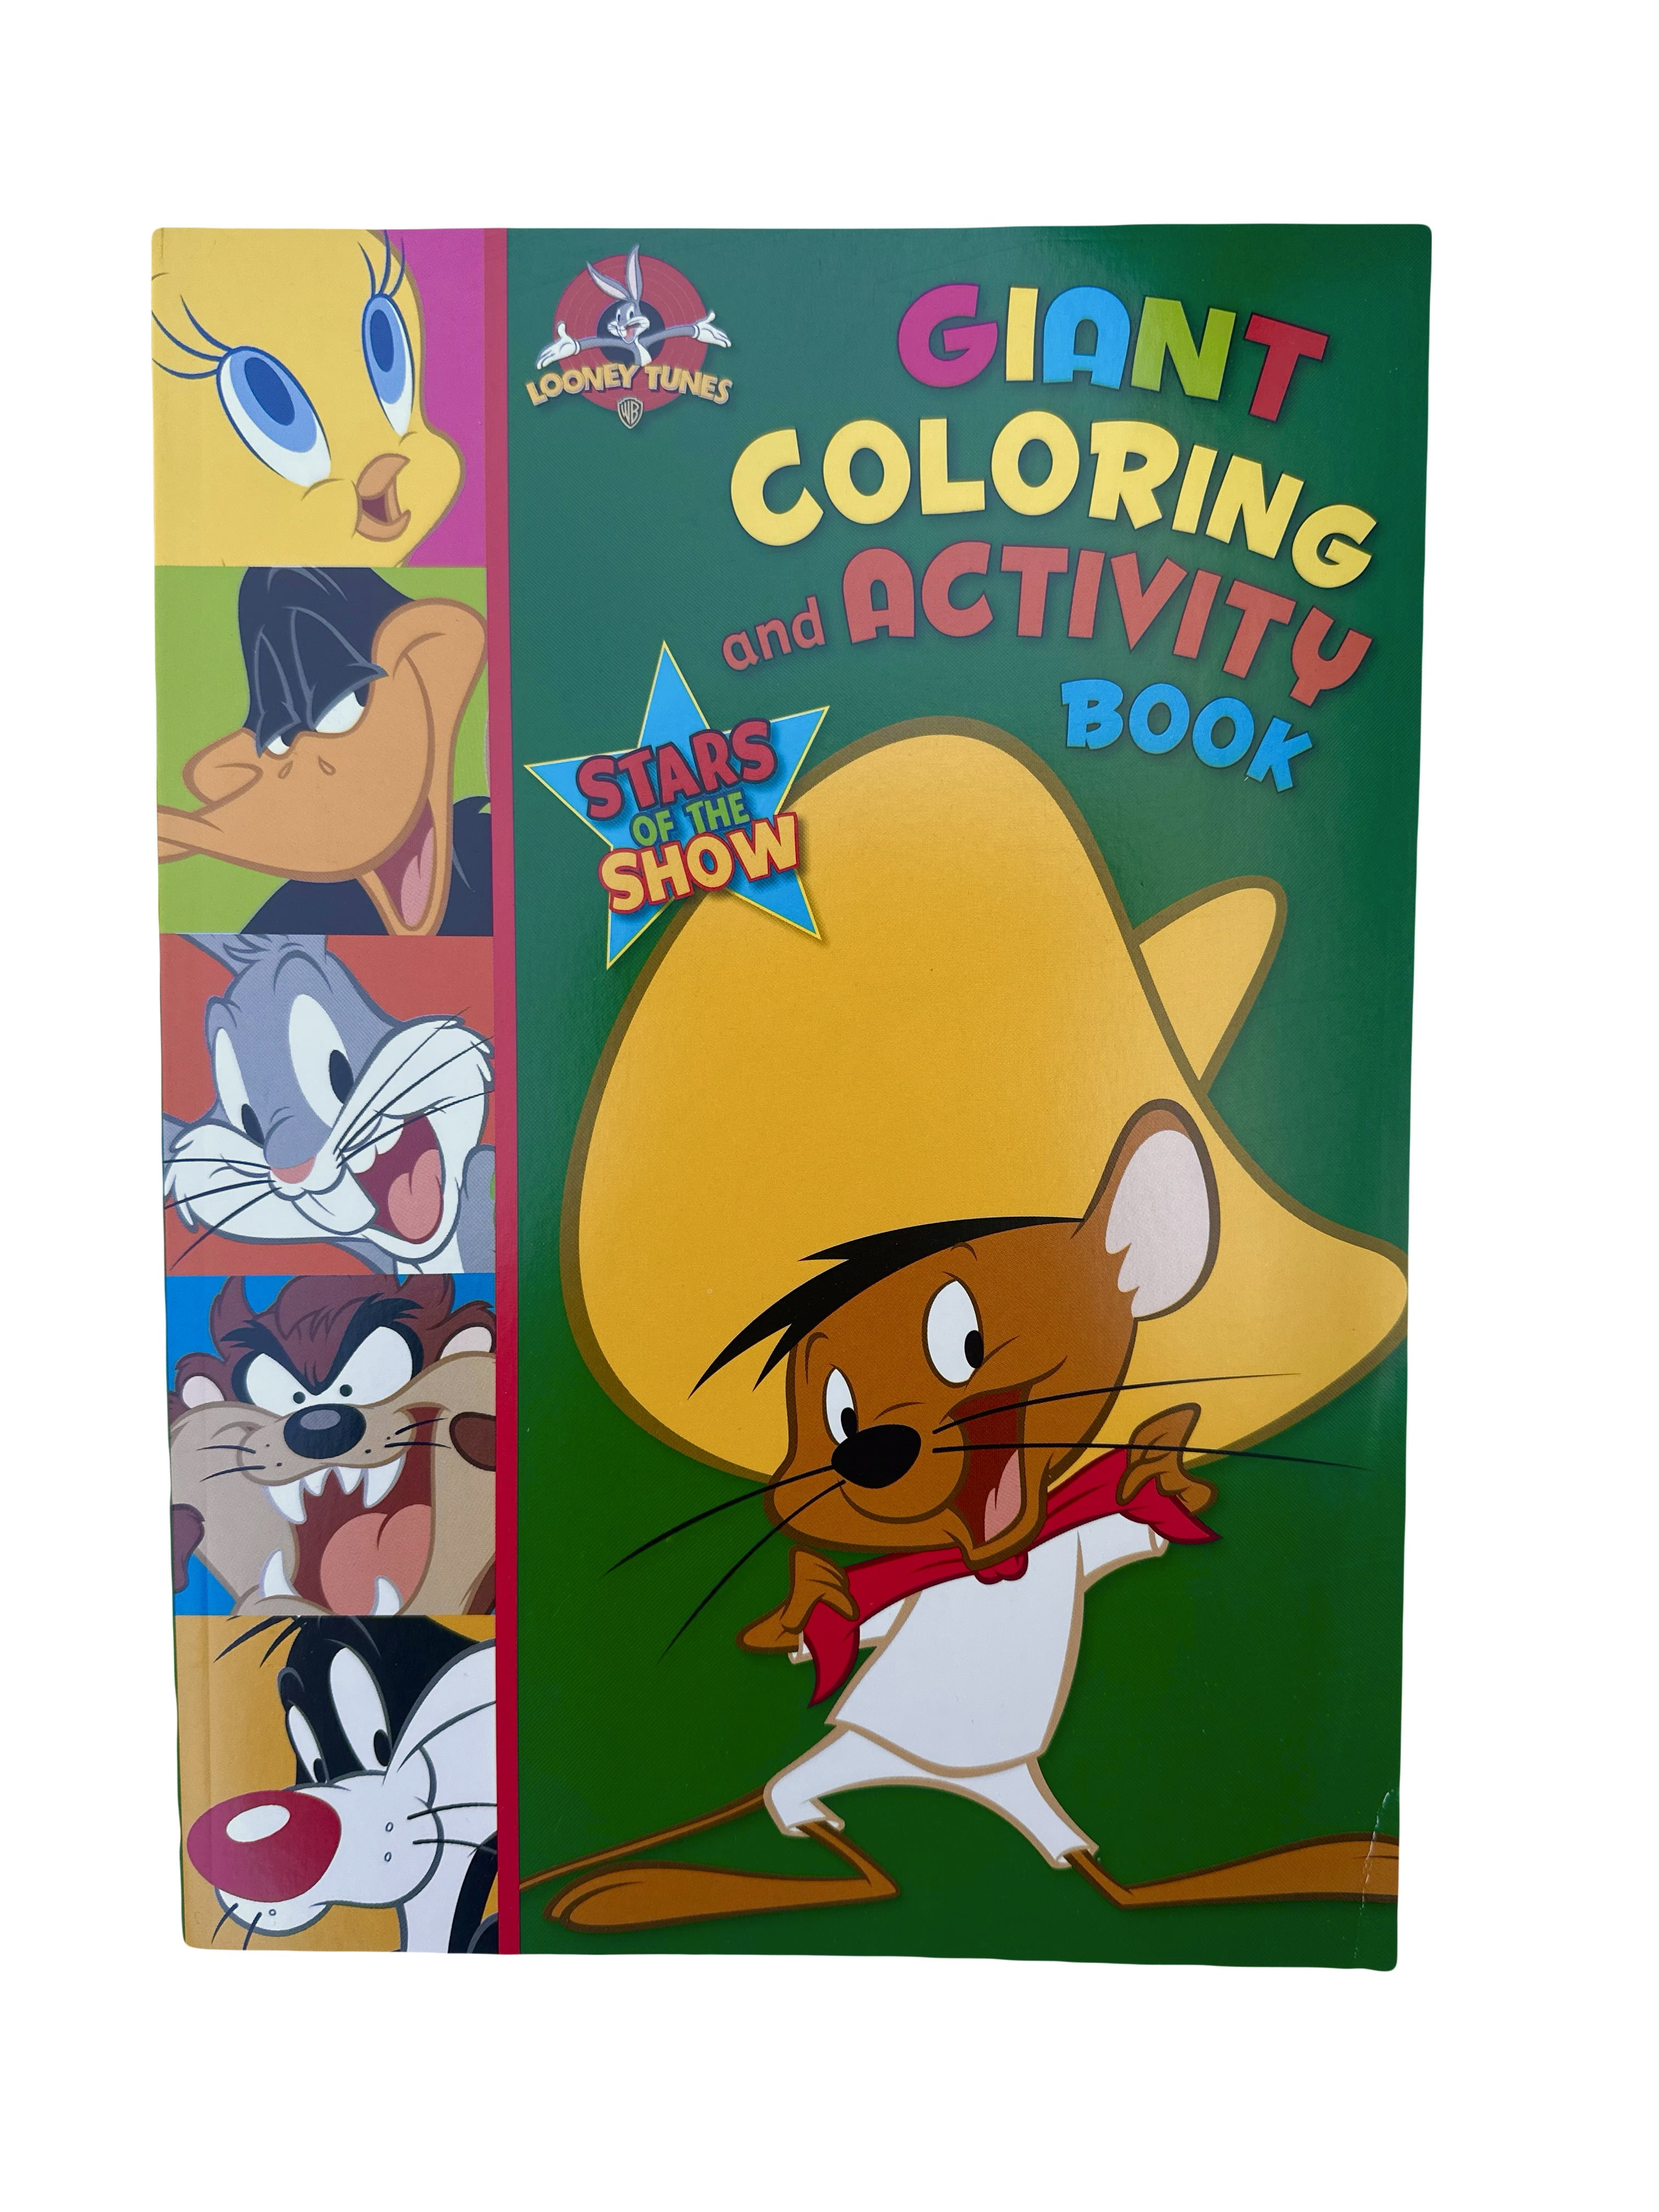 Looney tunes coloring book